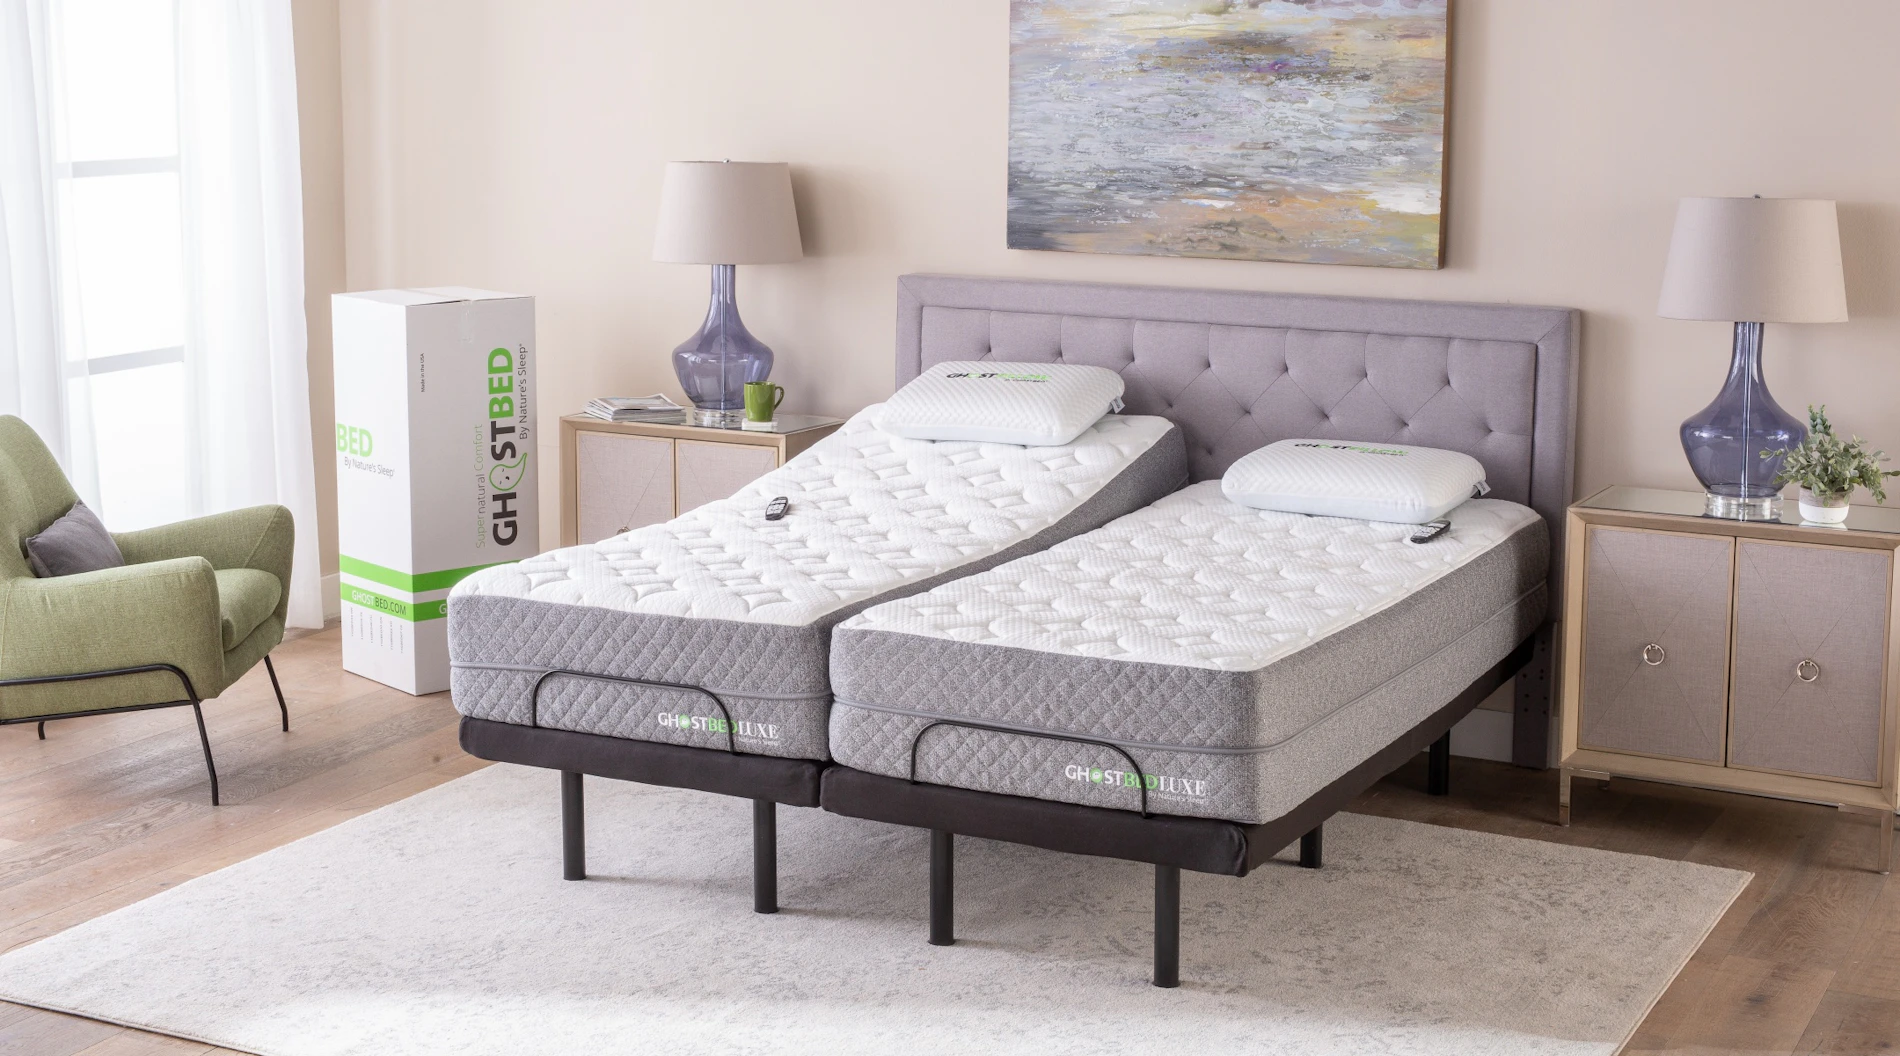 GhostBed Luxe Split King Adjustable Bed Base.